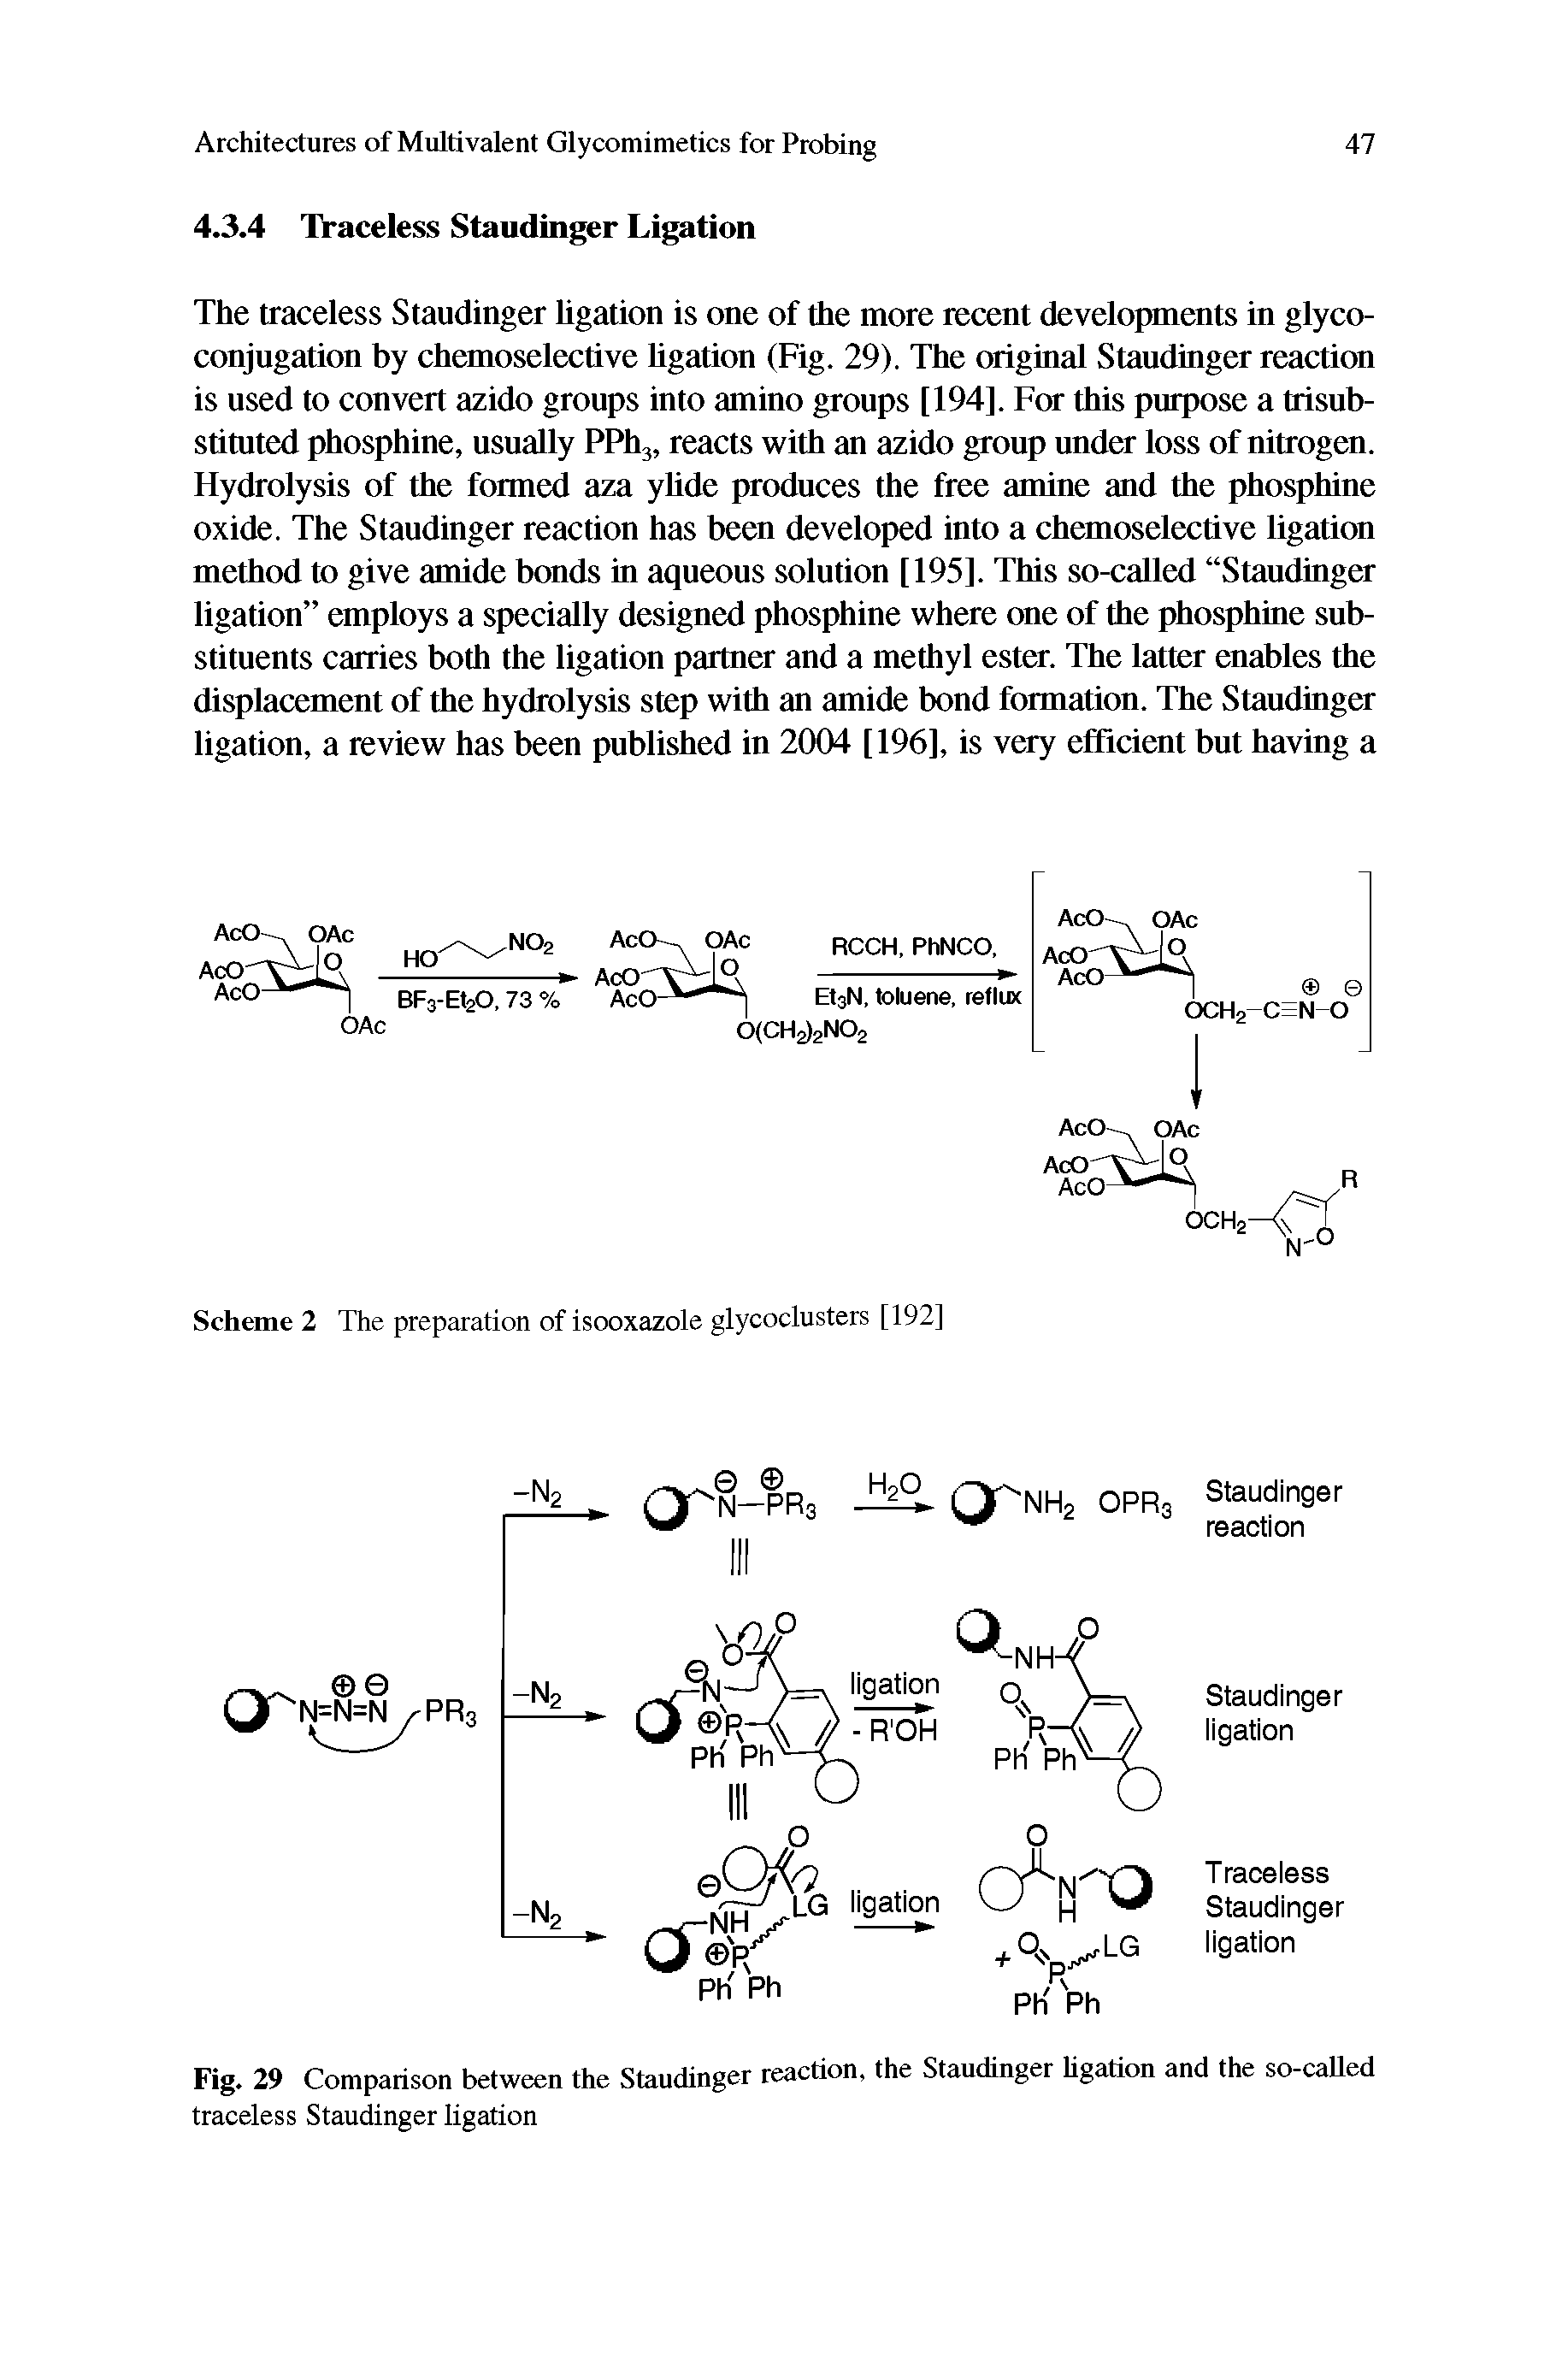 Fig. 29 Comparison between the Staudinger reaction, the Staudinger ligation and the so-called traceless Staudinger ligation...